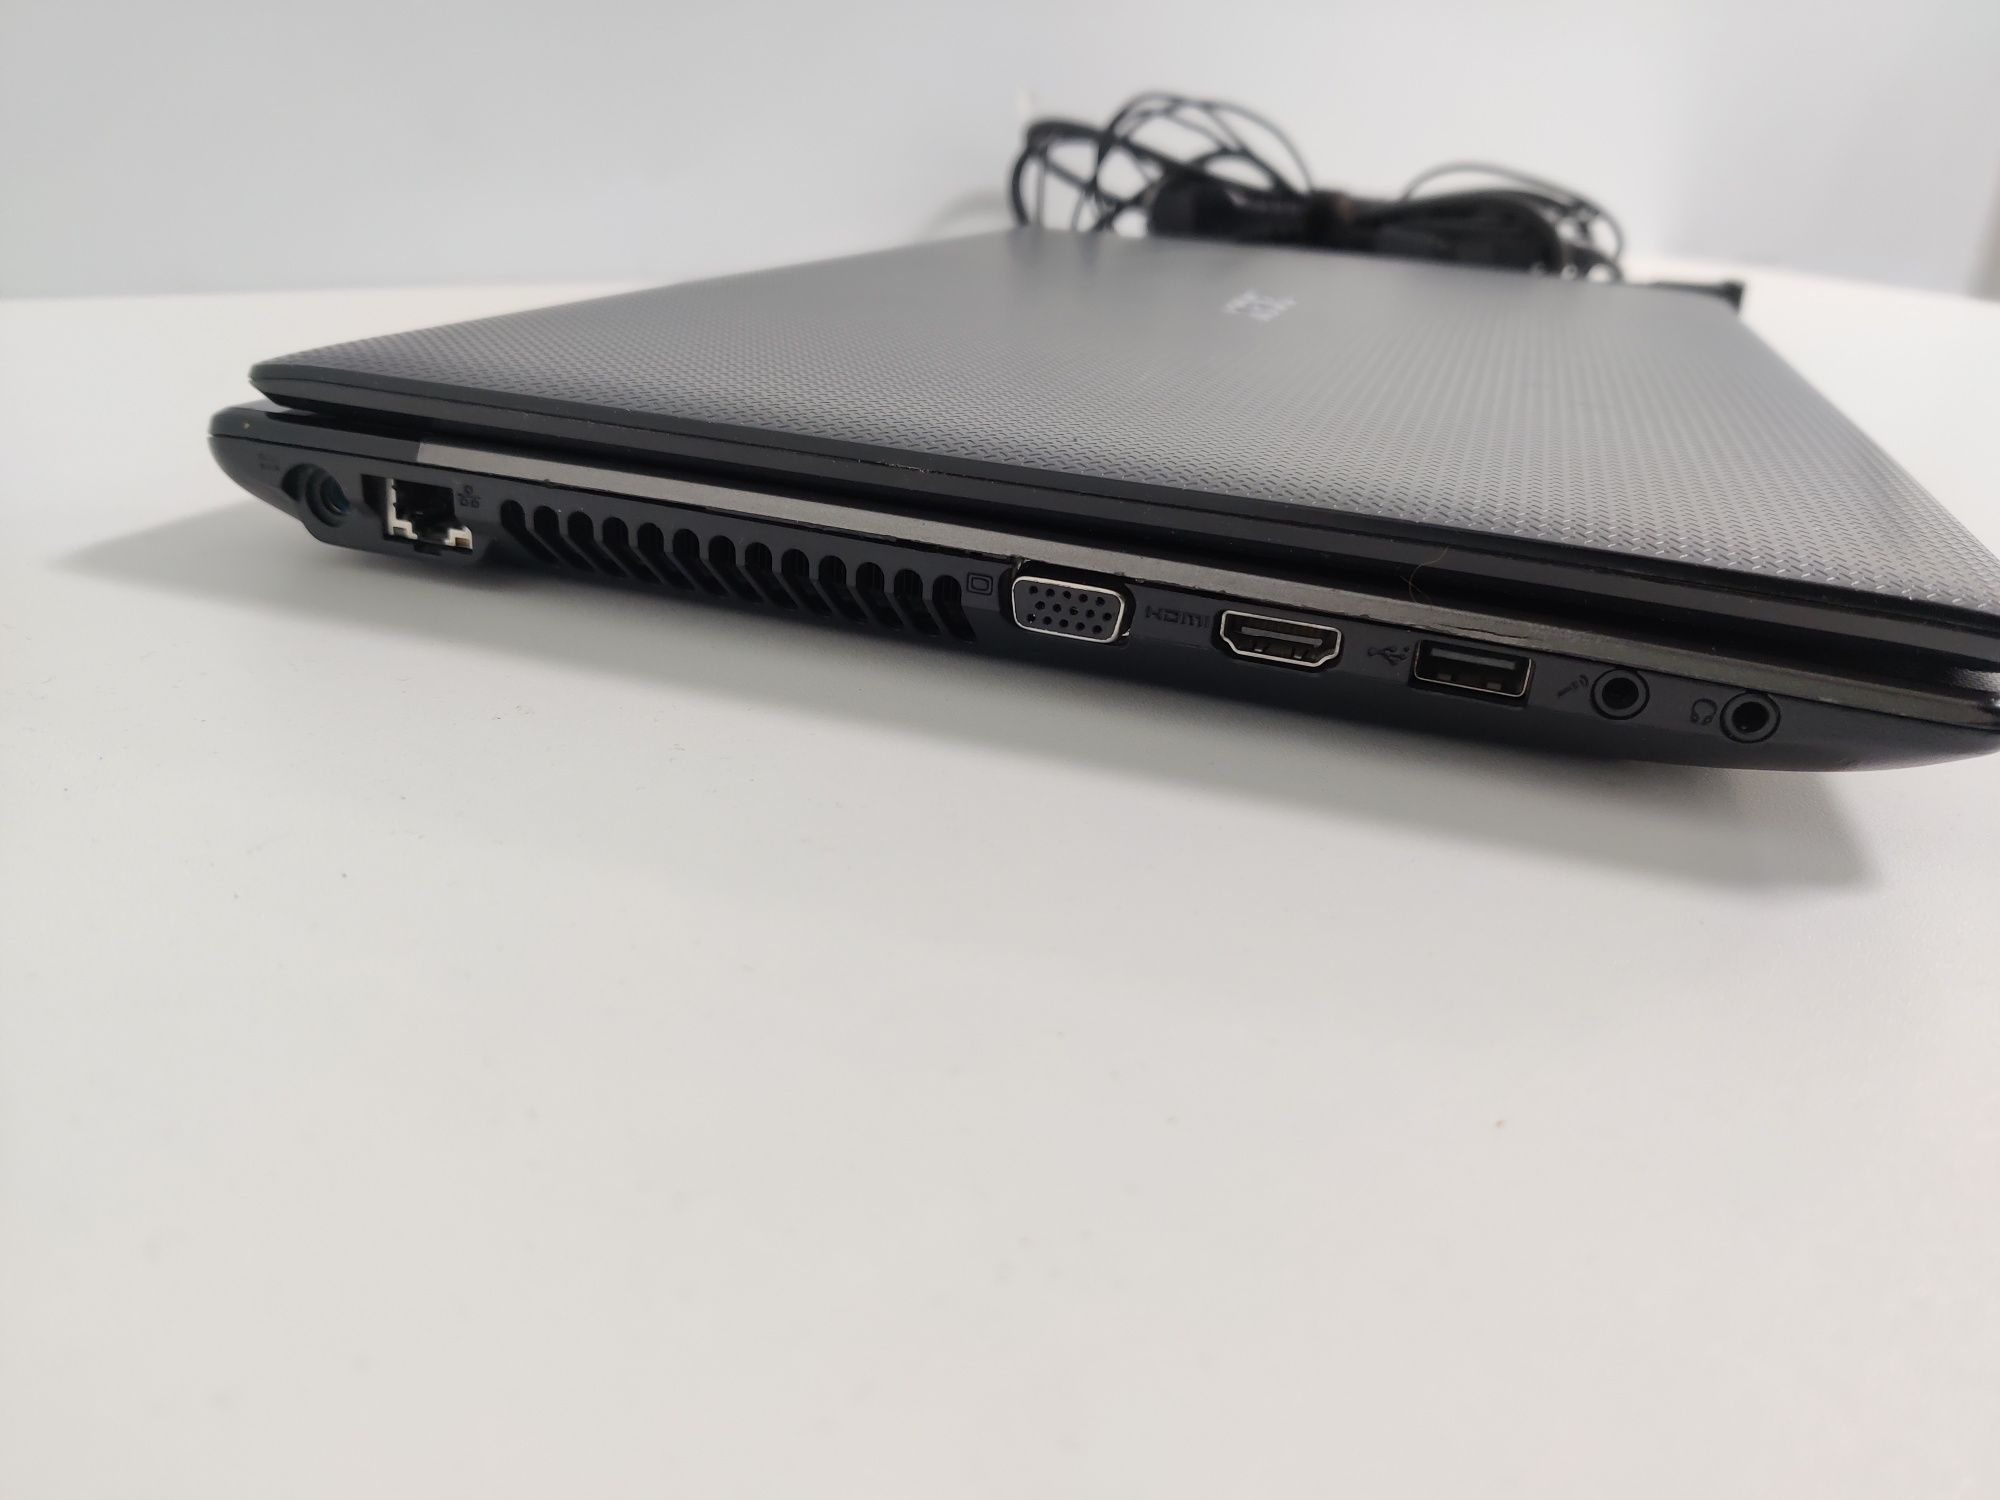 Ноутбук Acer Aspire 5560G 4 ядер 6ГБ 500гб Windows 10